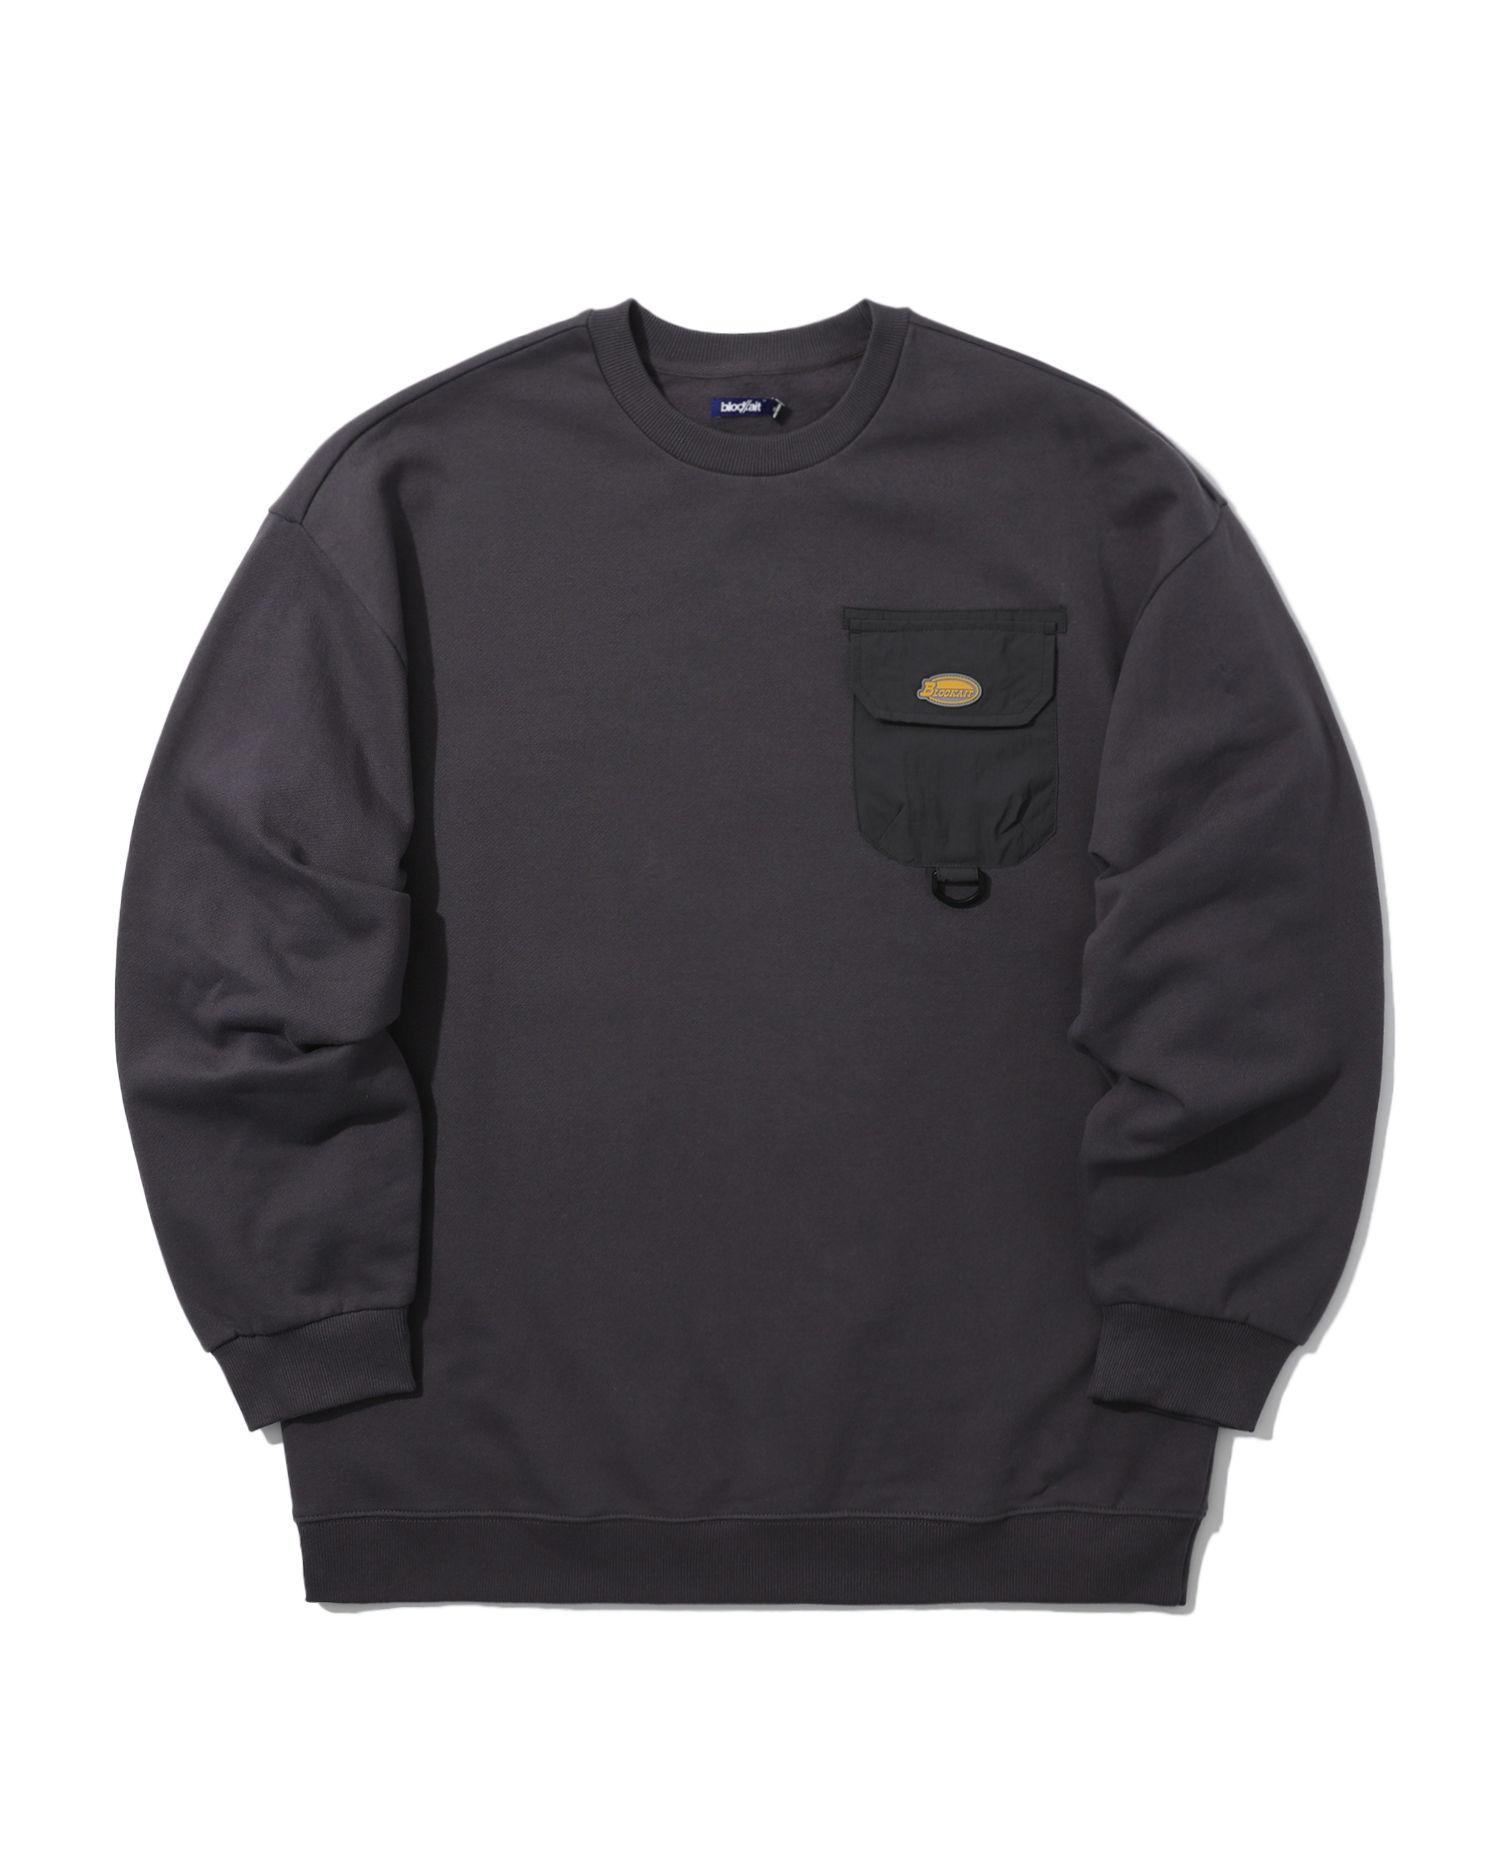 Pocketed sweatshirt by BLOCKAIT